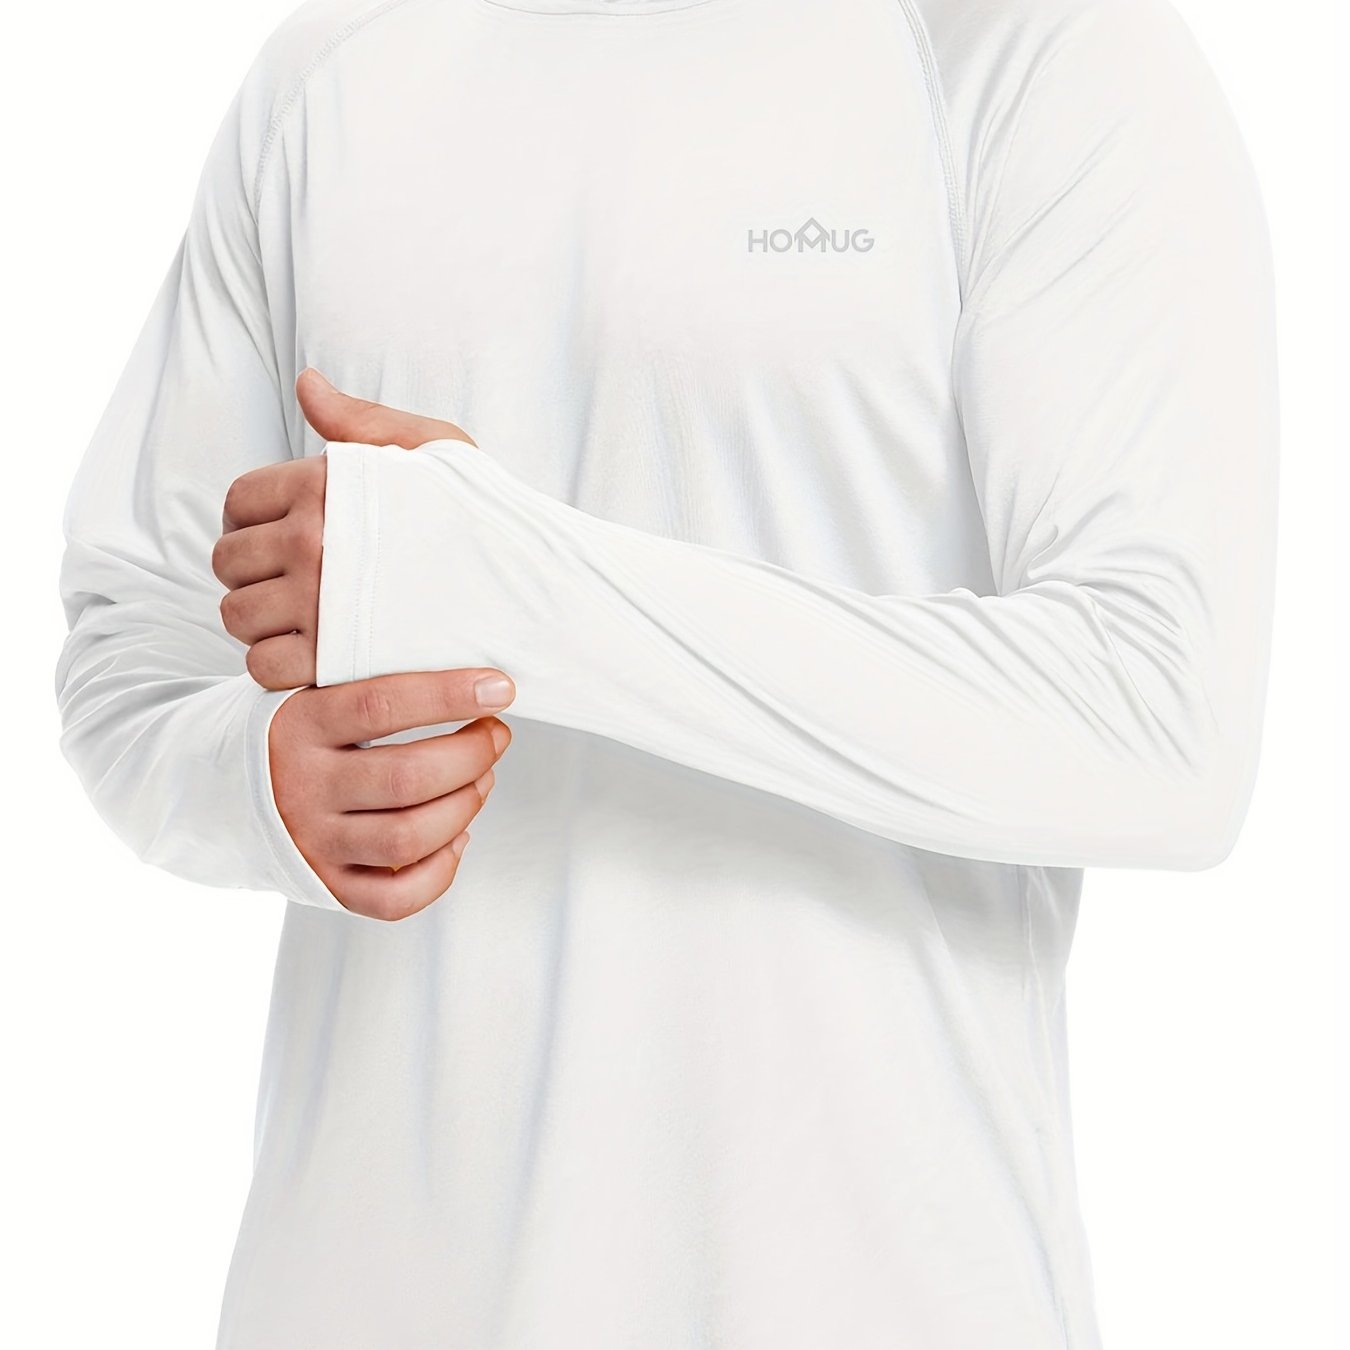 Jiuguva 6 Pcs Thermal Transfer Long Sleeves Crewneck Sweatshirt Polyester Cotton Thermal Transfer Blanks Shirts Unisex White Thermal Transfer T